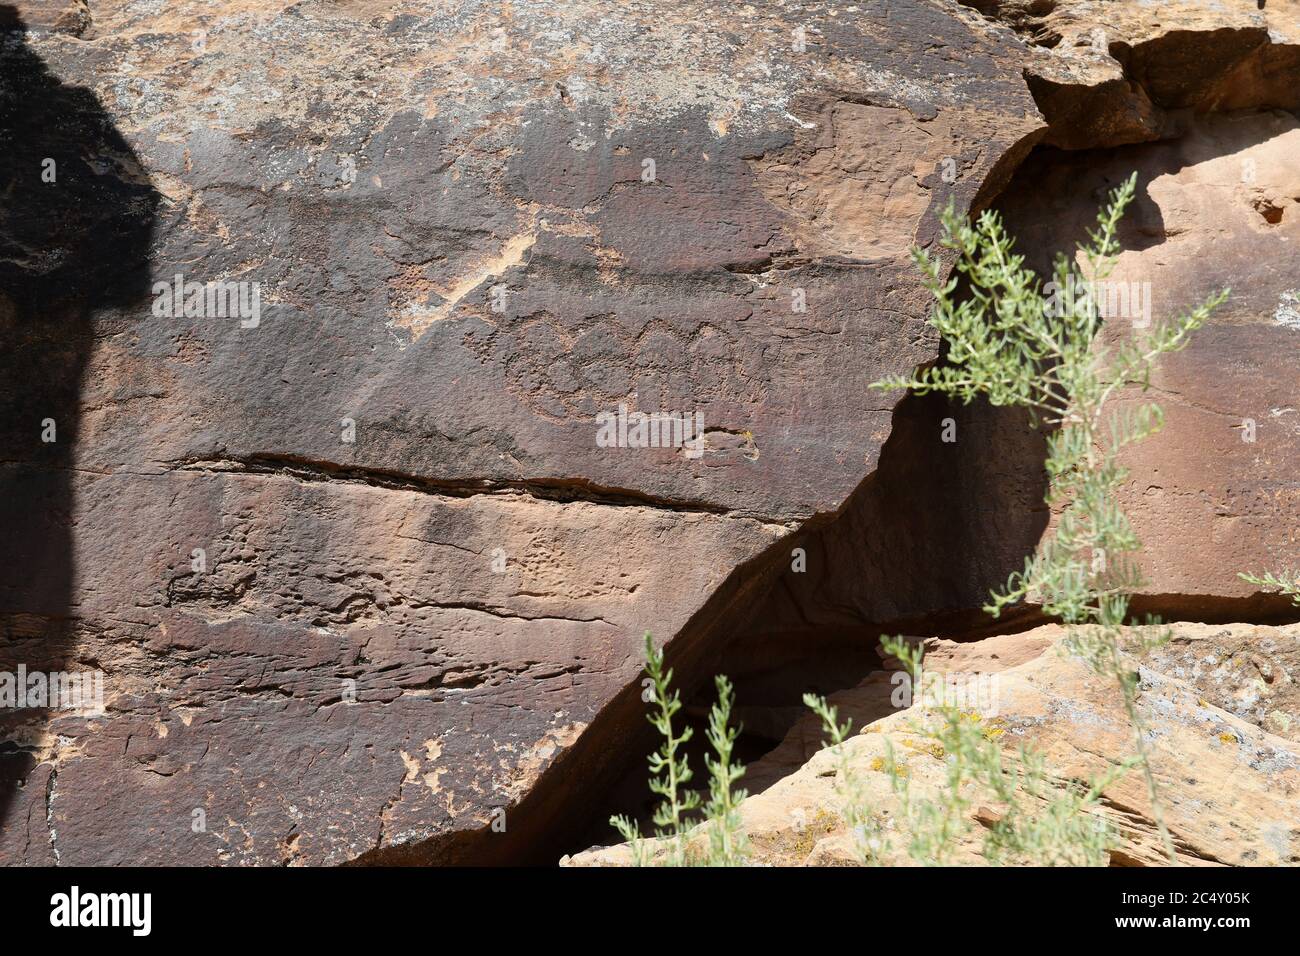 Ancient Native American Indian rock art petroglyph Utah 1461. Nine Mile Canyon, Utah. World’s longest art gallery of ancient native America. Stock Photo